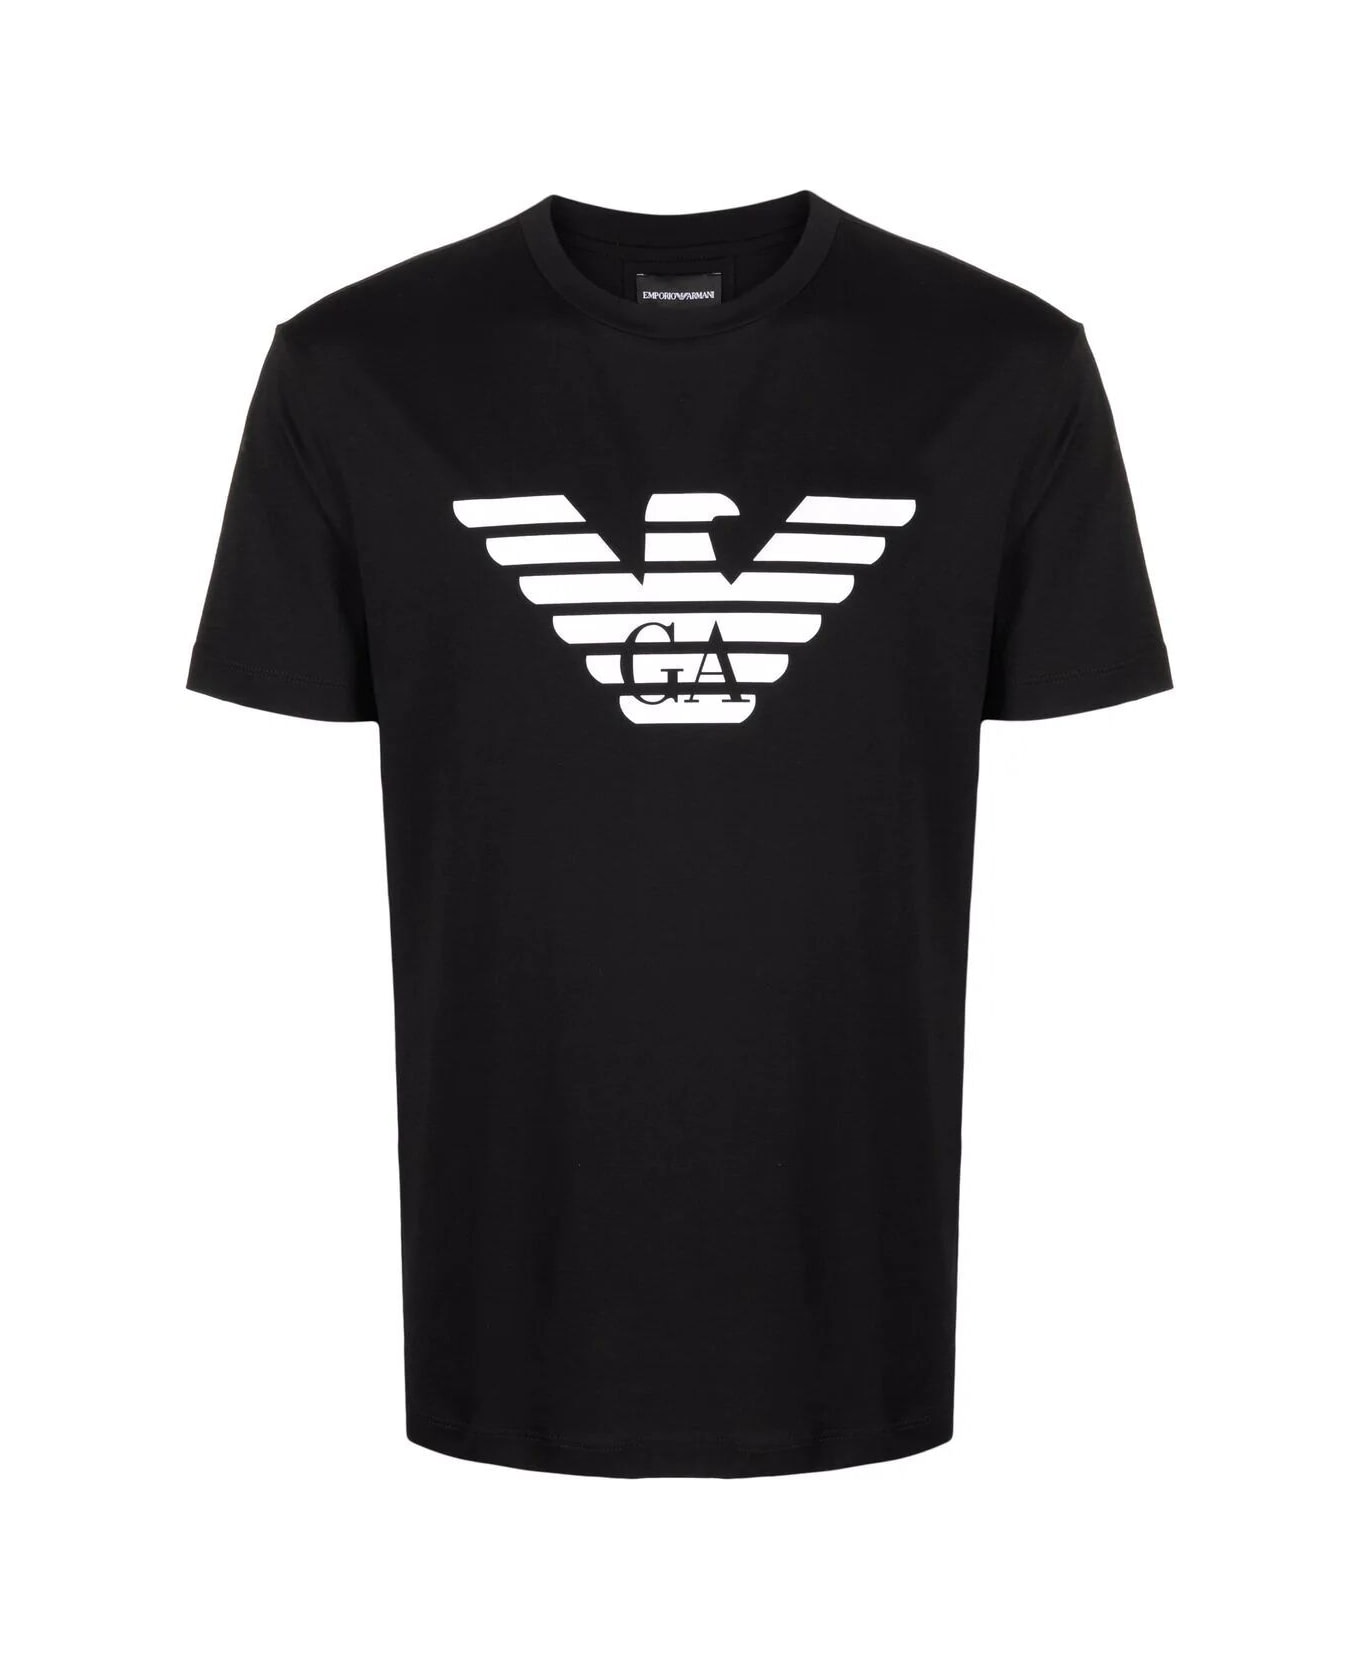 Emporio Armani T-shirt - Eagle Black